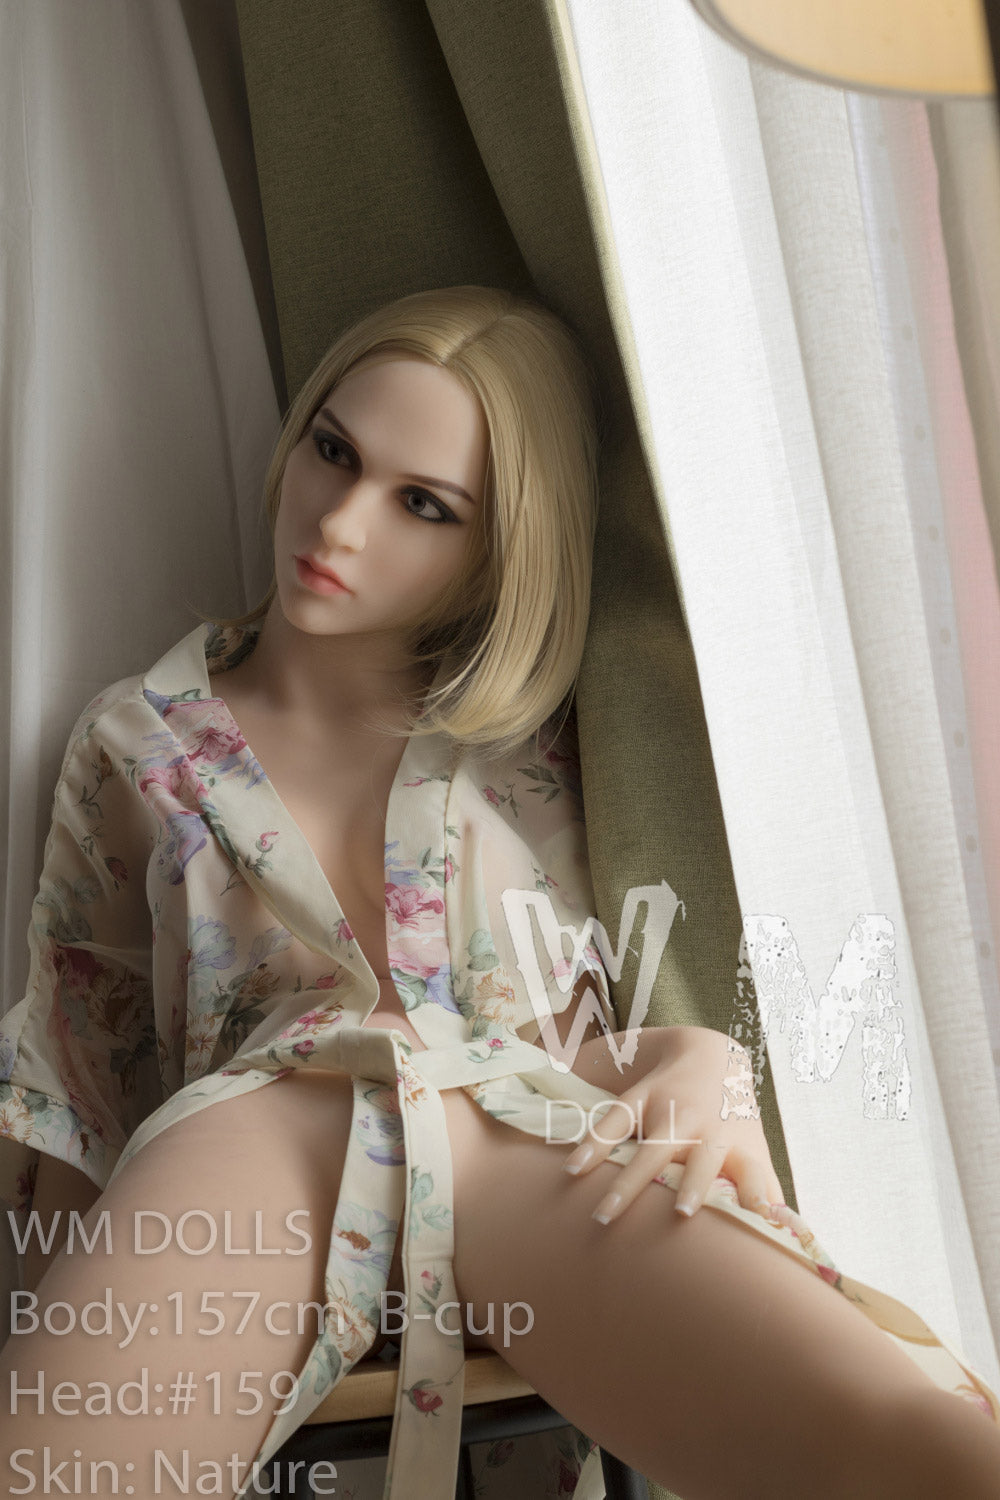 WM DOLL 157 CM B Fusion - Ayla | Buy Sex Dolls at DOLLS ACTUALLY